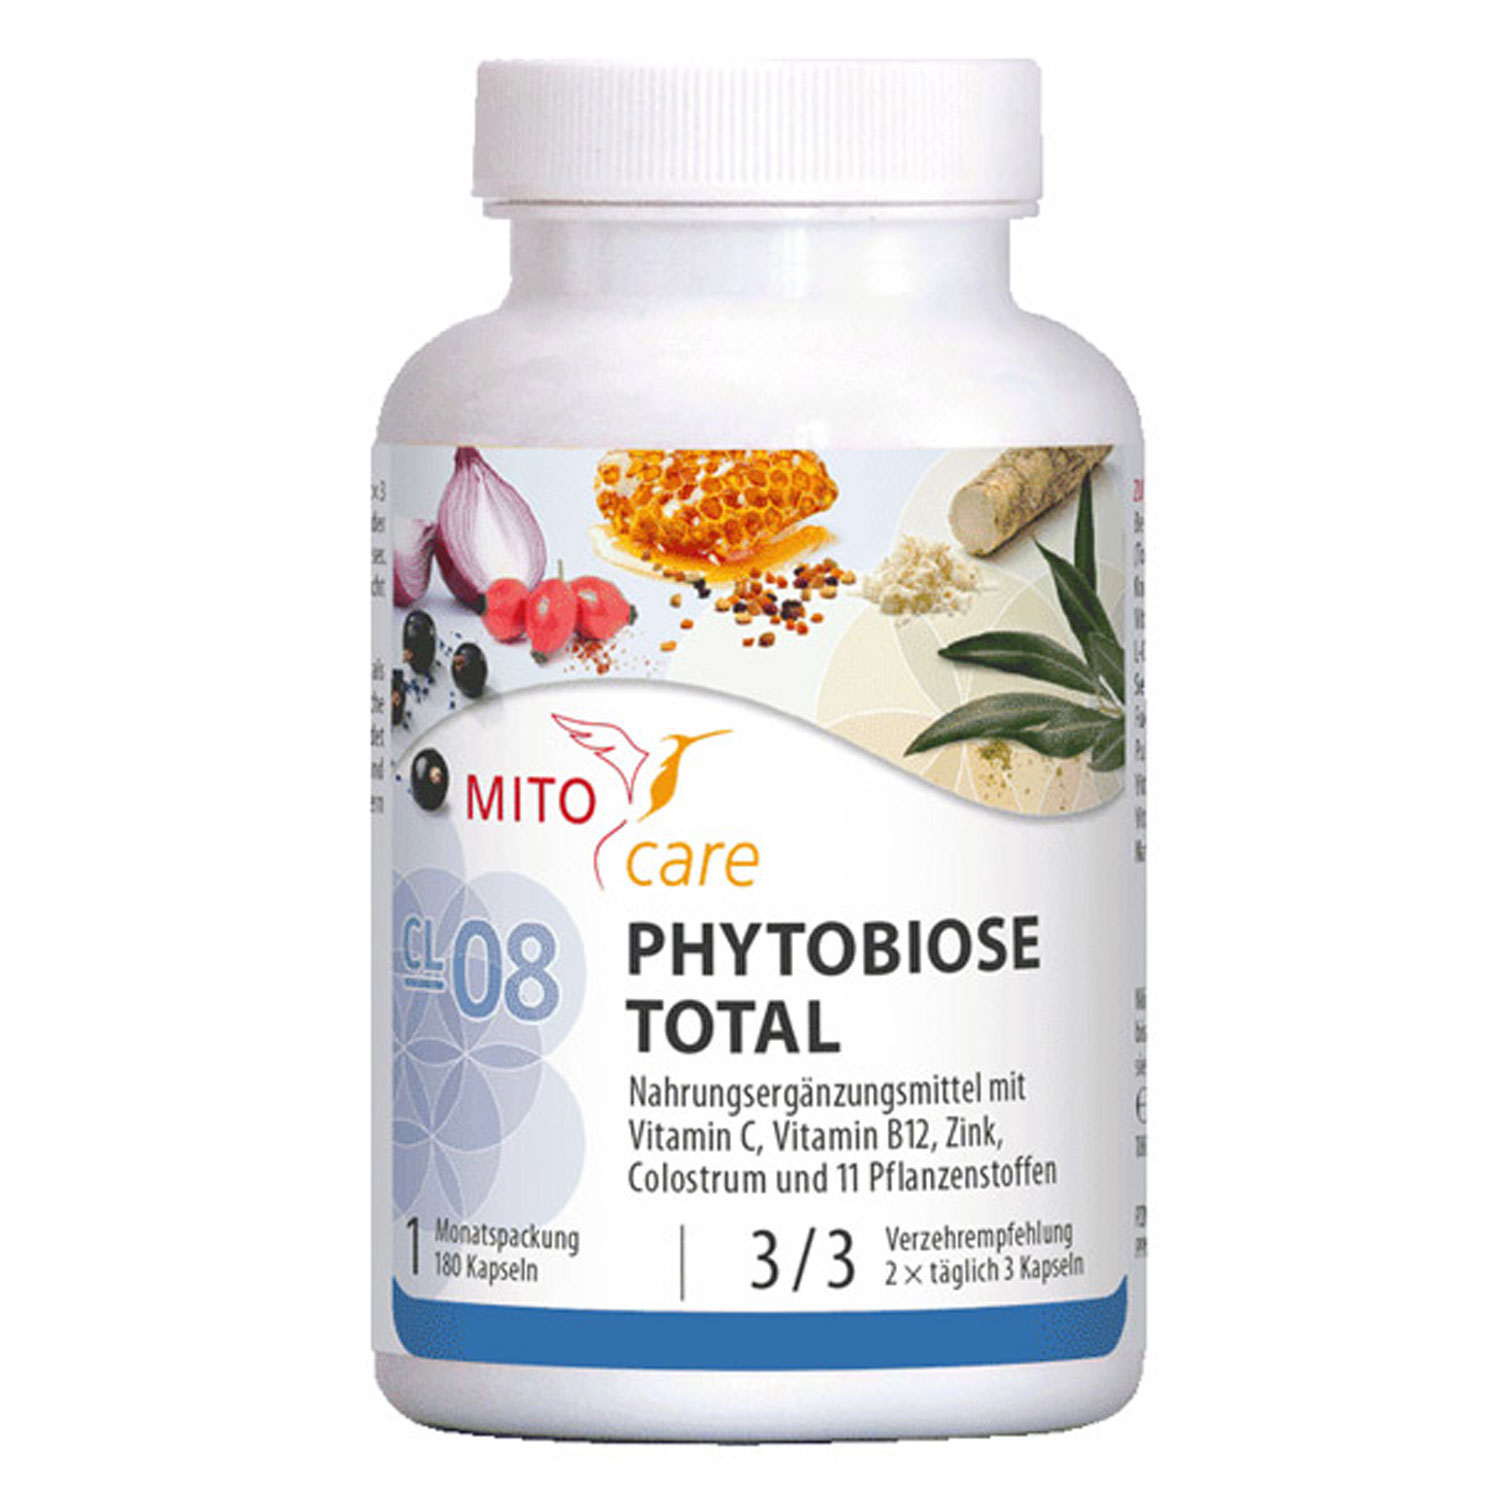 Phytobiose Total von Mitocare - 180 Kapseln